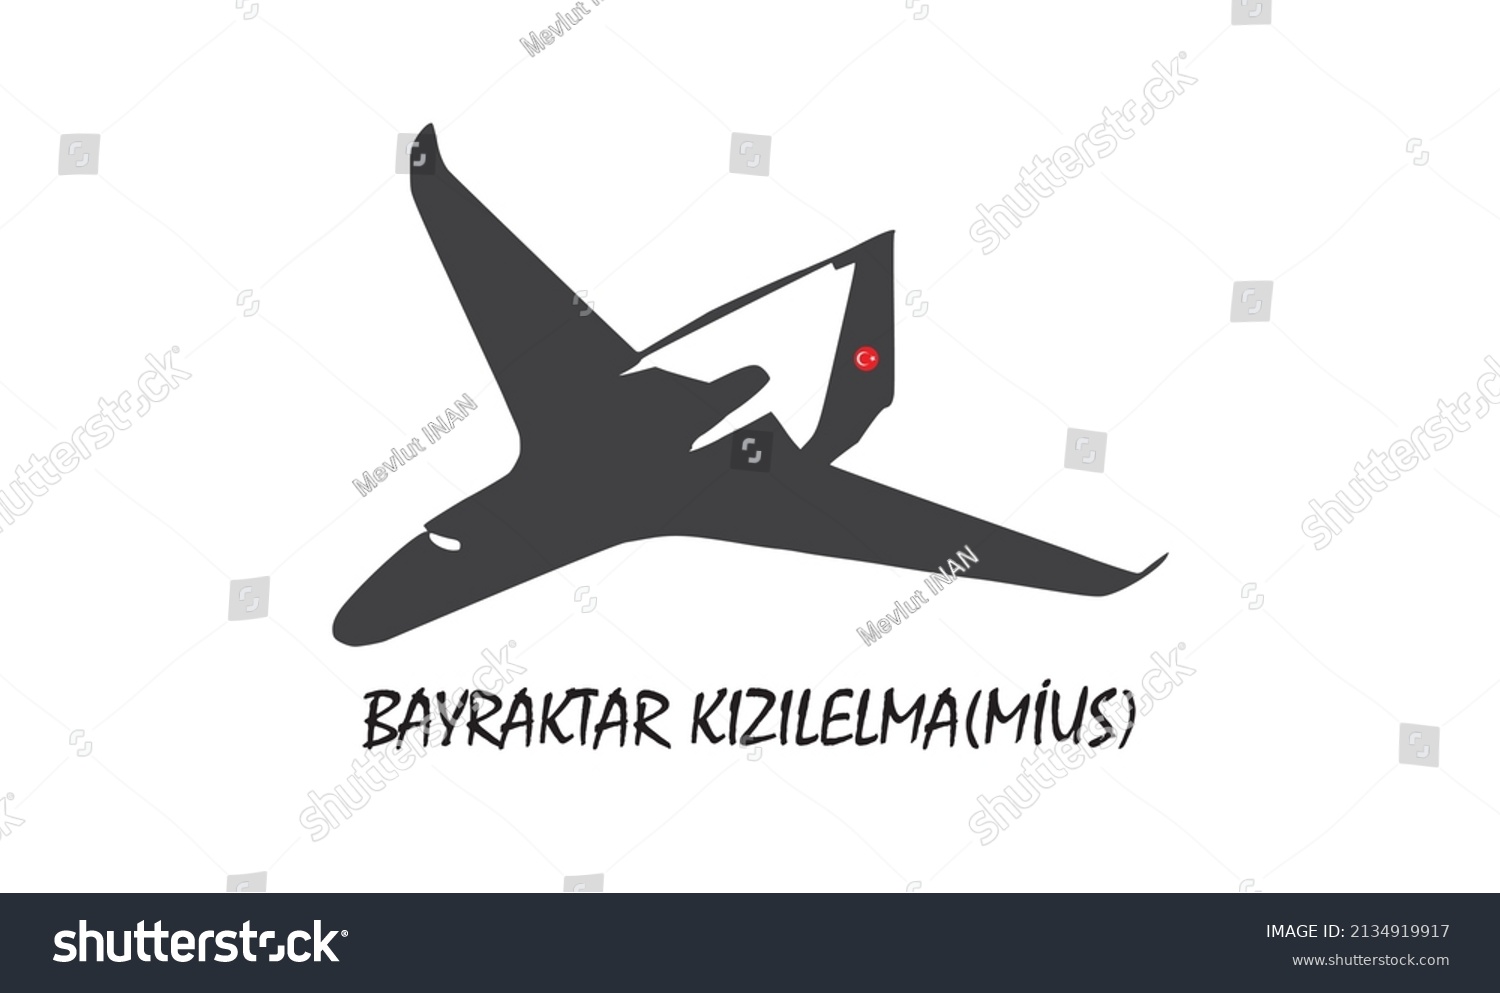 SVG of Bayraktar Kızılelma CUAS - Combat Unmanned Aircraft System. svg